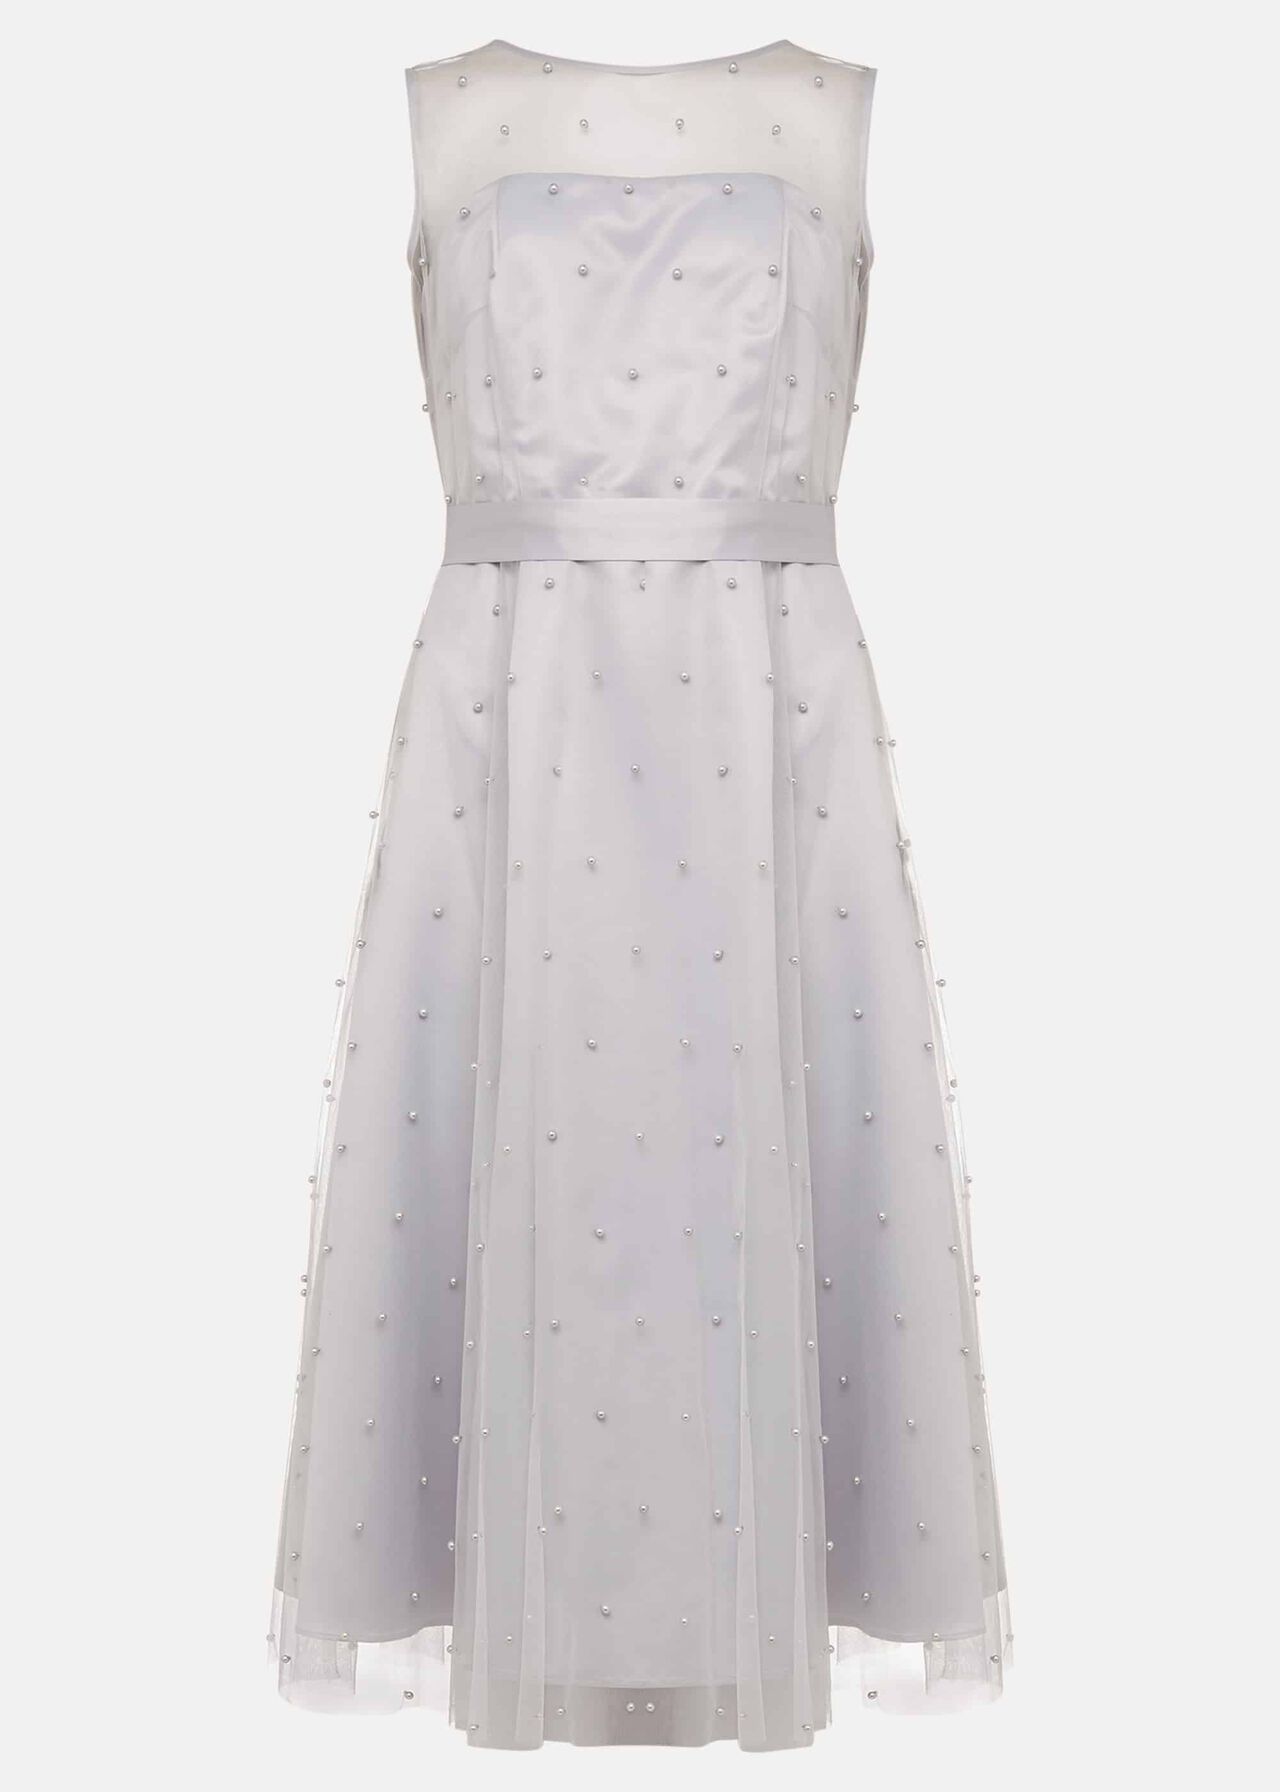 Evadine Pearl Embellished Tulle Dress